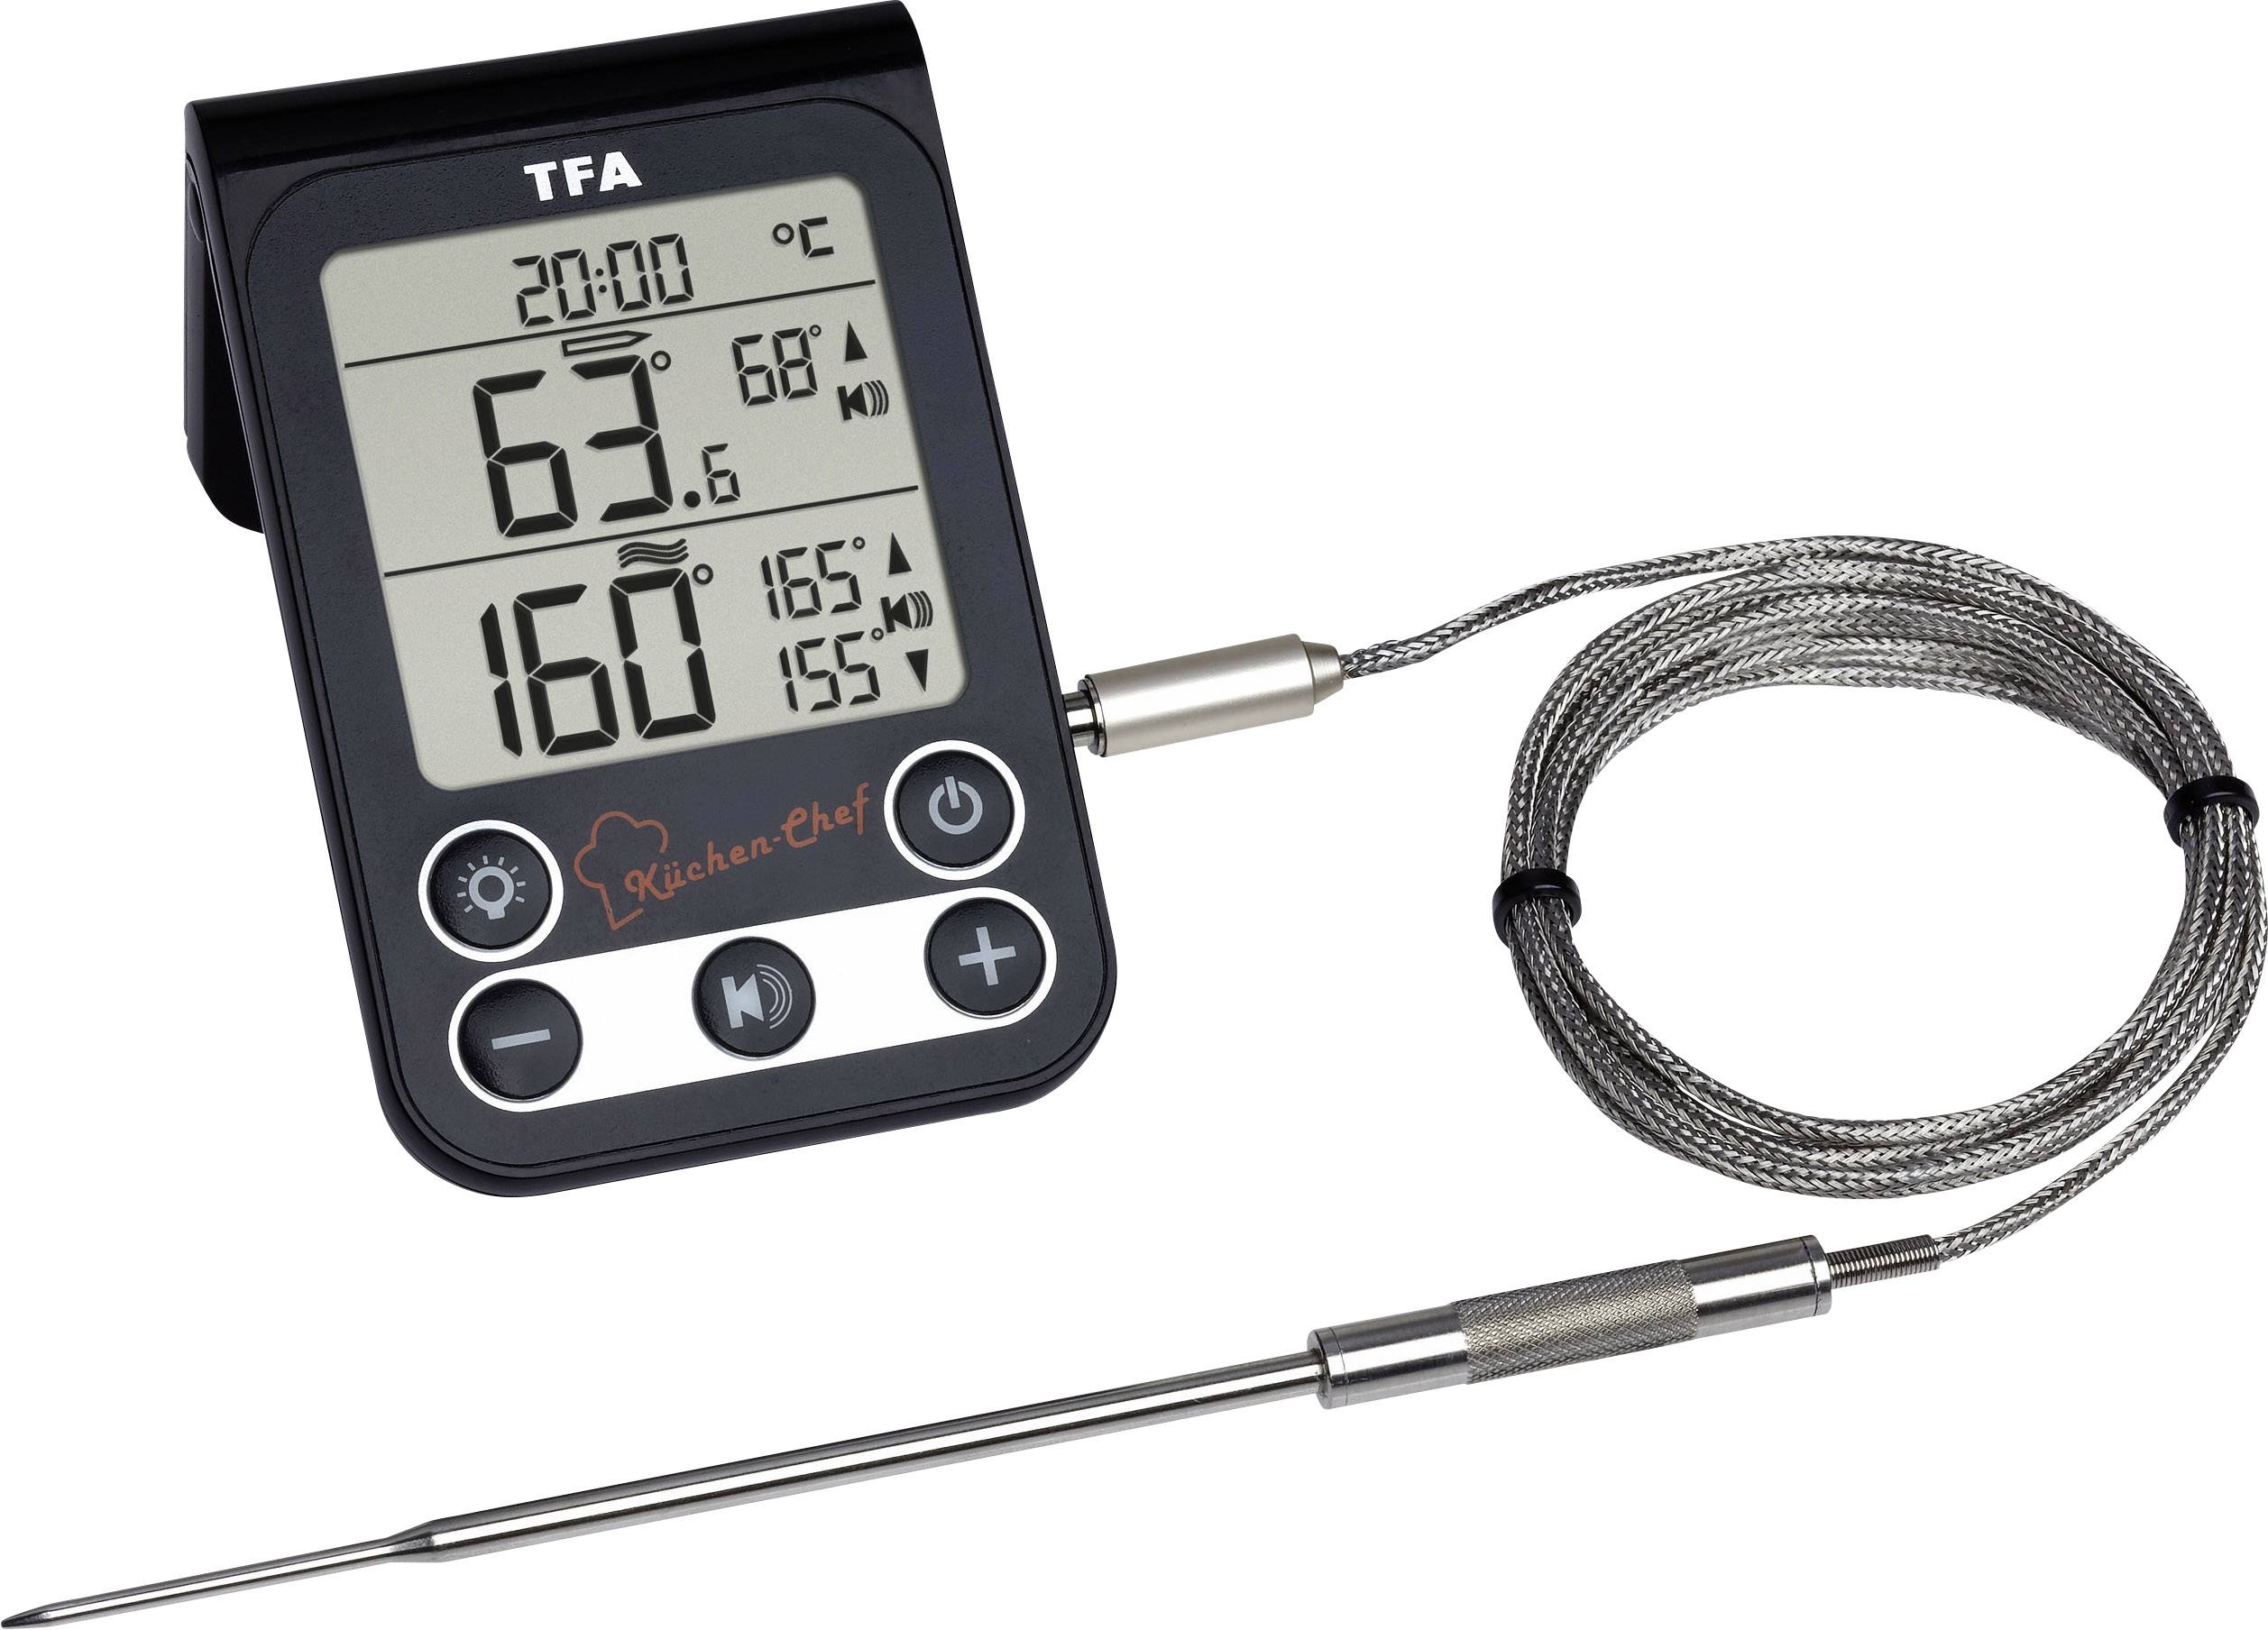 Buy TFA Dostmann 14.1512.01 KÜCHEN-CHEF BBQ thermometer Black